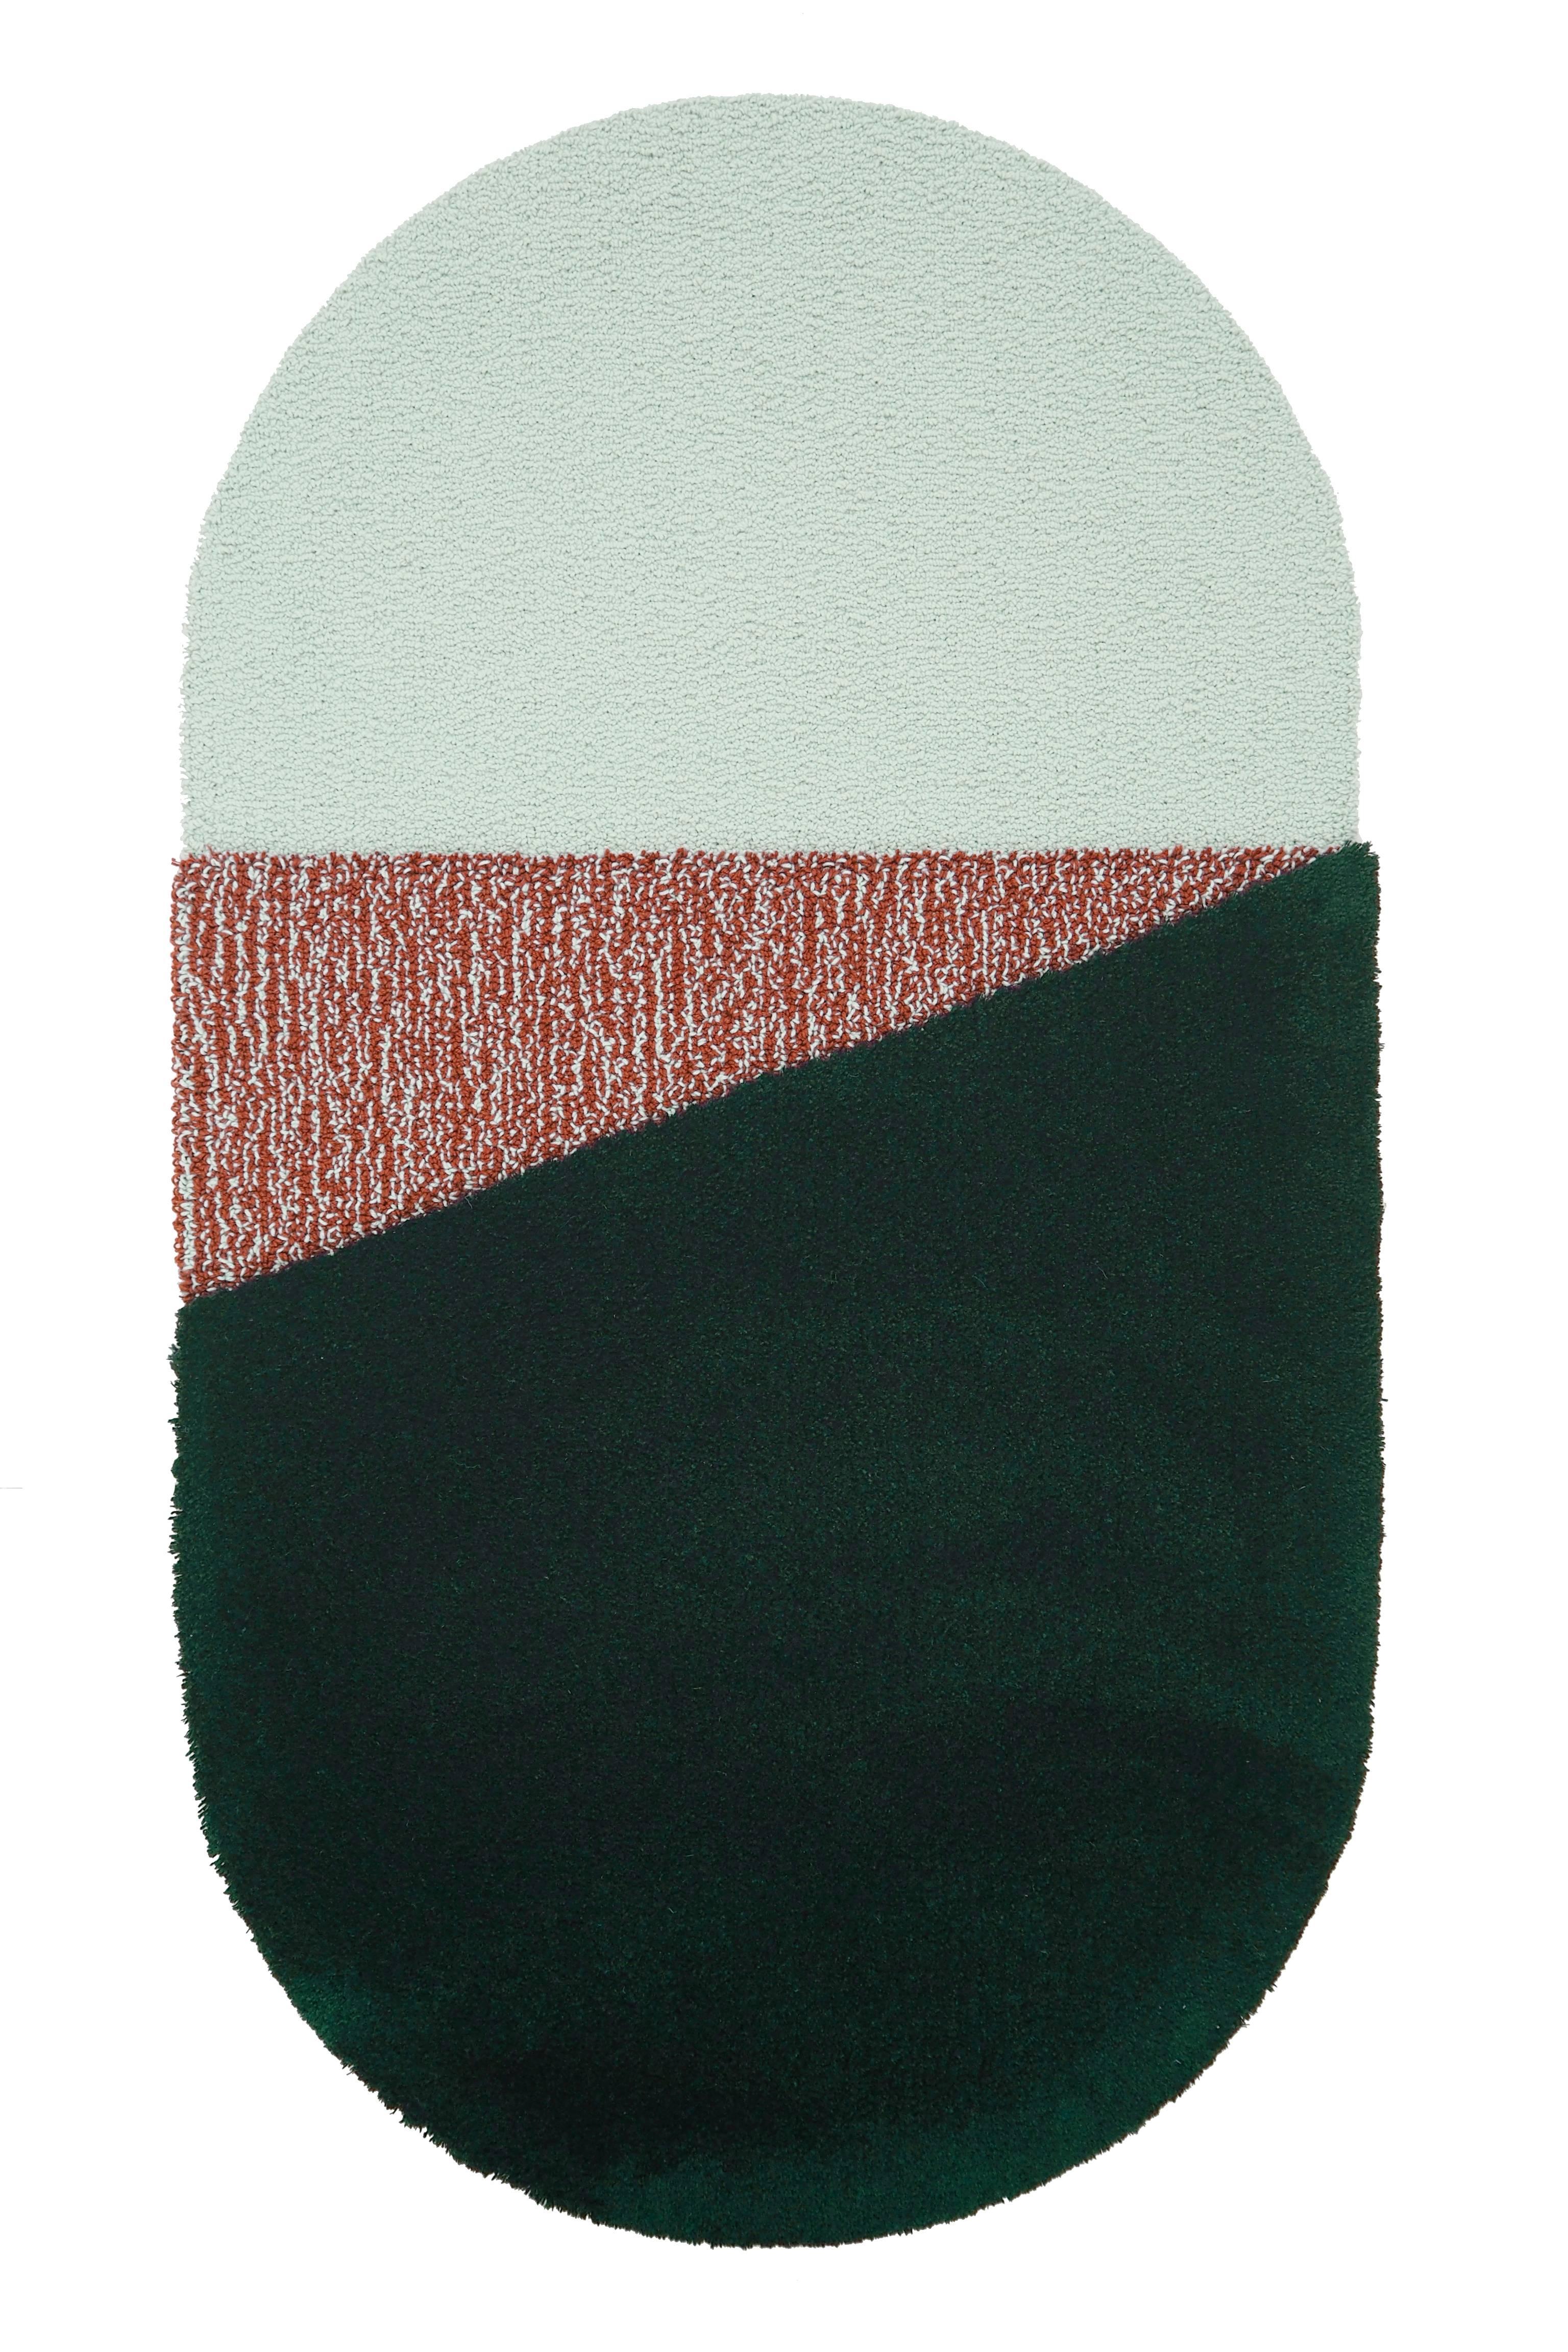 Contemporary Small Green Oci Rug Triptych by Seraina Lareida For Sale